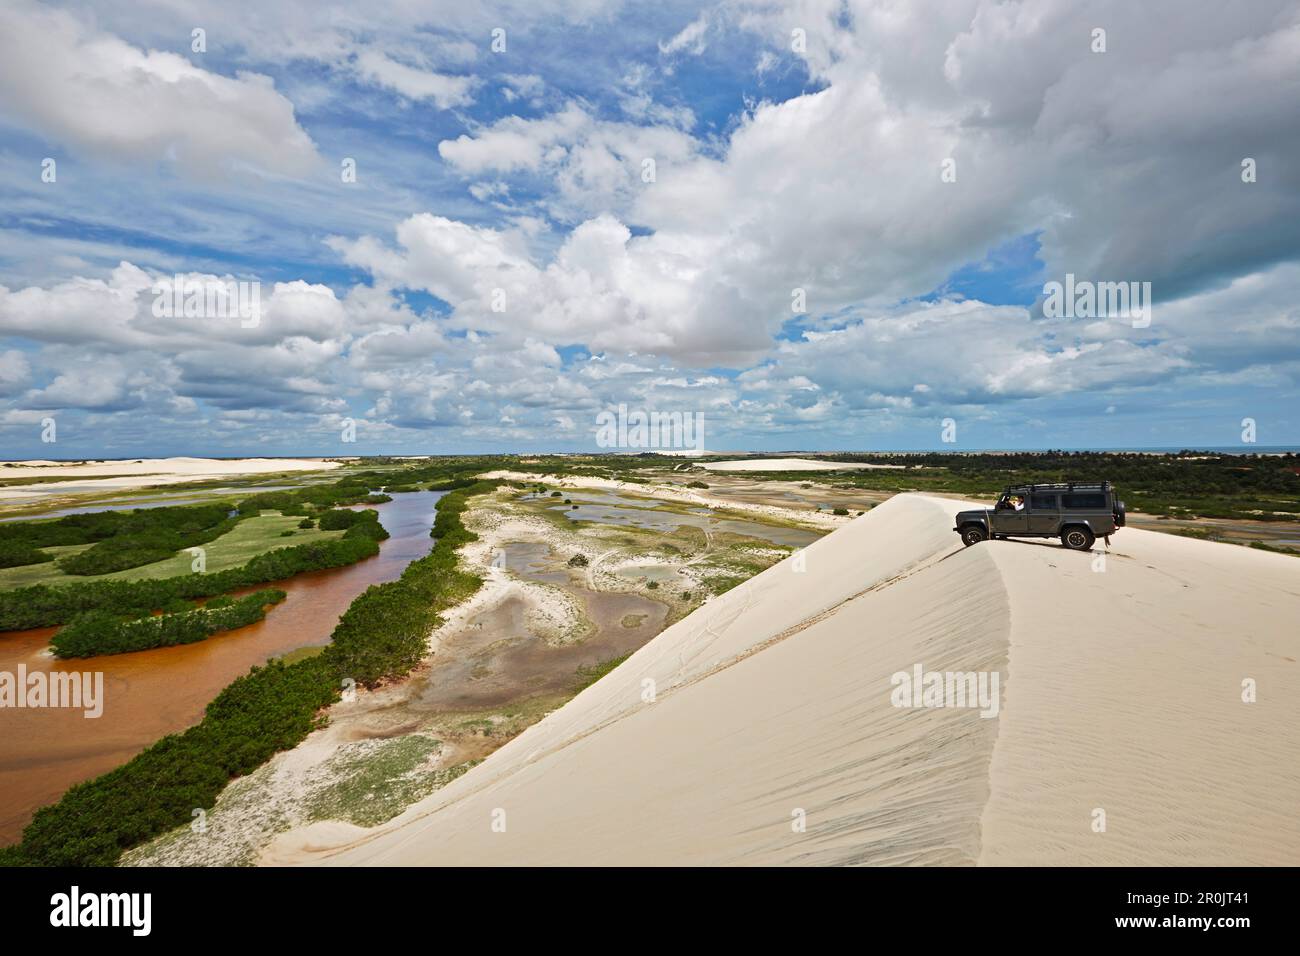 On the Tatajuba sand dunes, lagoons are filled by rainwater, ride with 4WD, Tatatjuba, west Jericoacoara, Ceara, Brazil Stock Photo